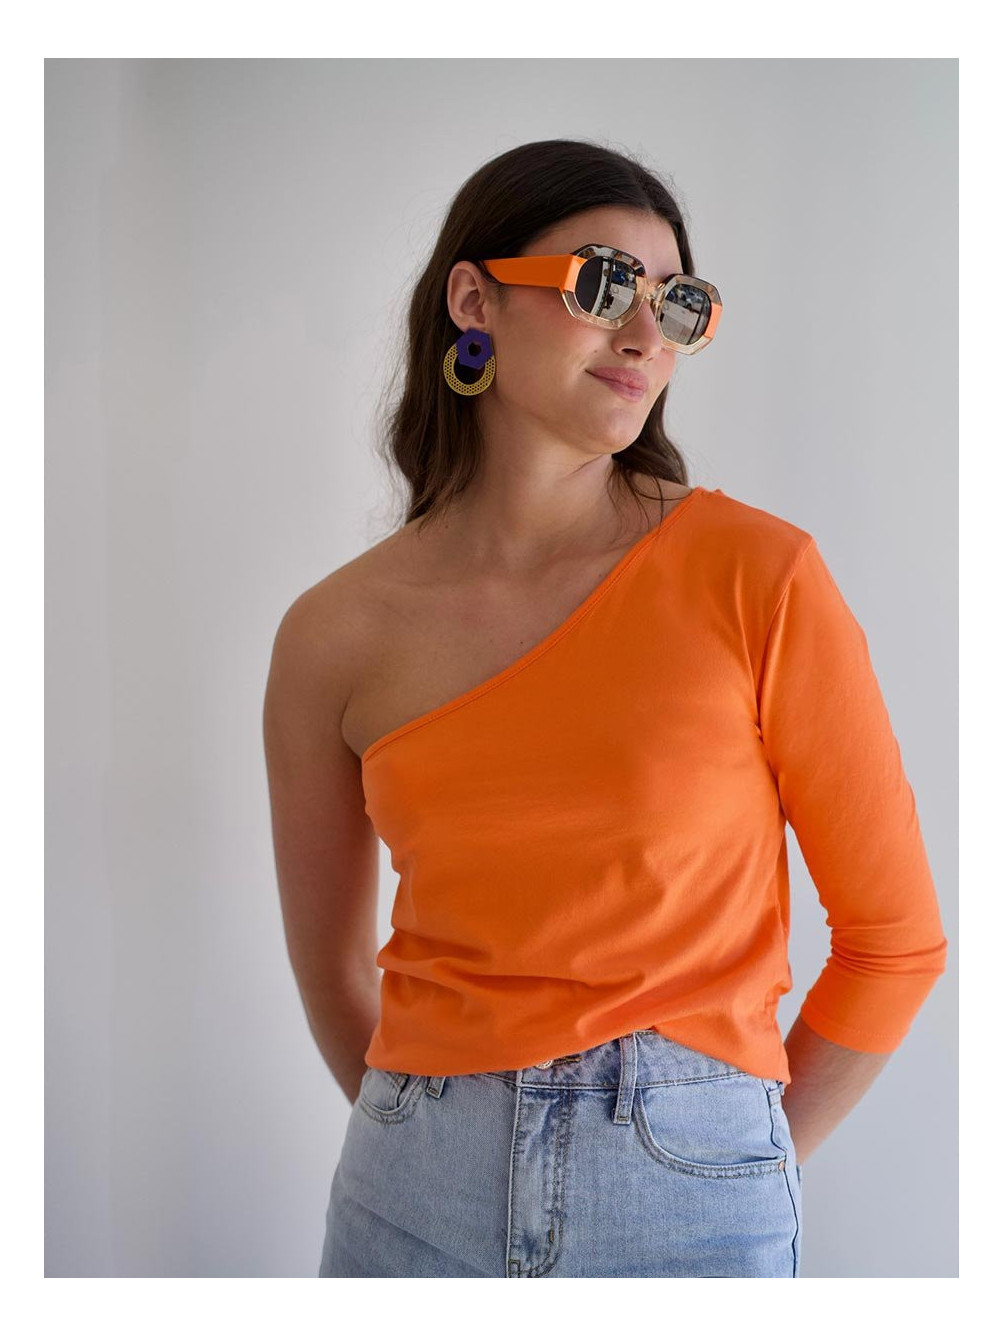 Top Asimétrico Basic, Blusa Naranja, Camiseta de Mujer, Mariquita Trasquilá